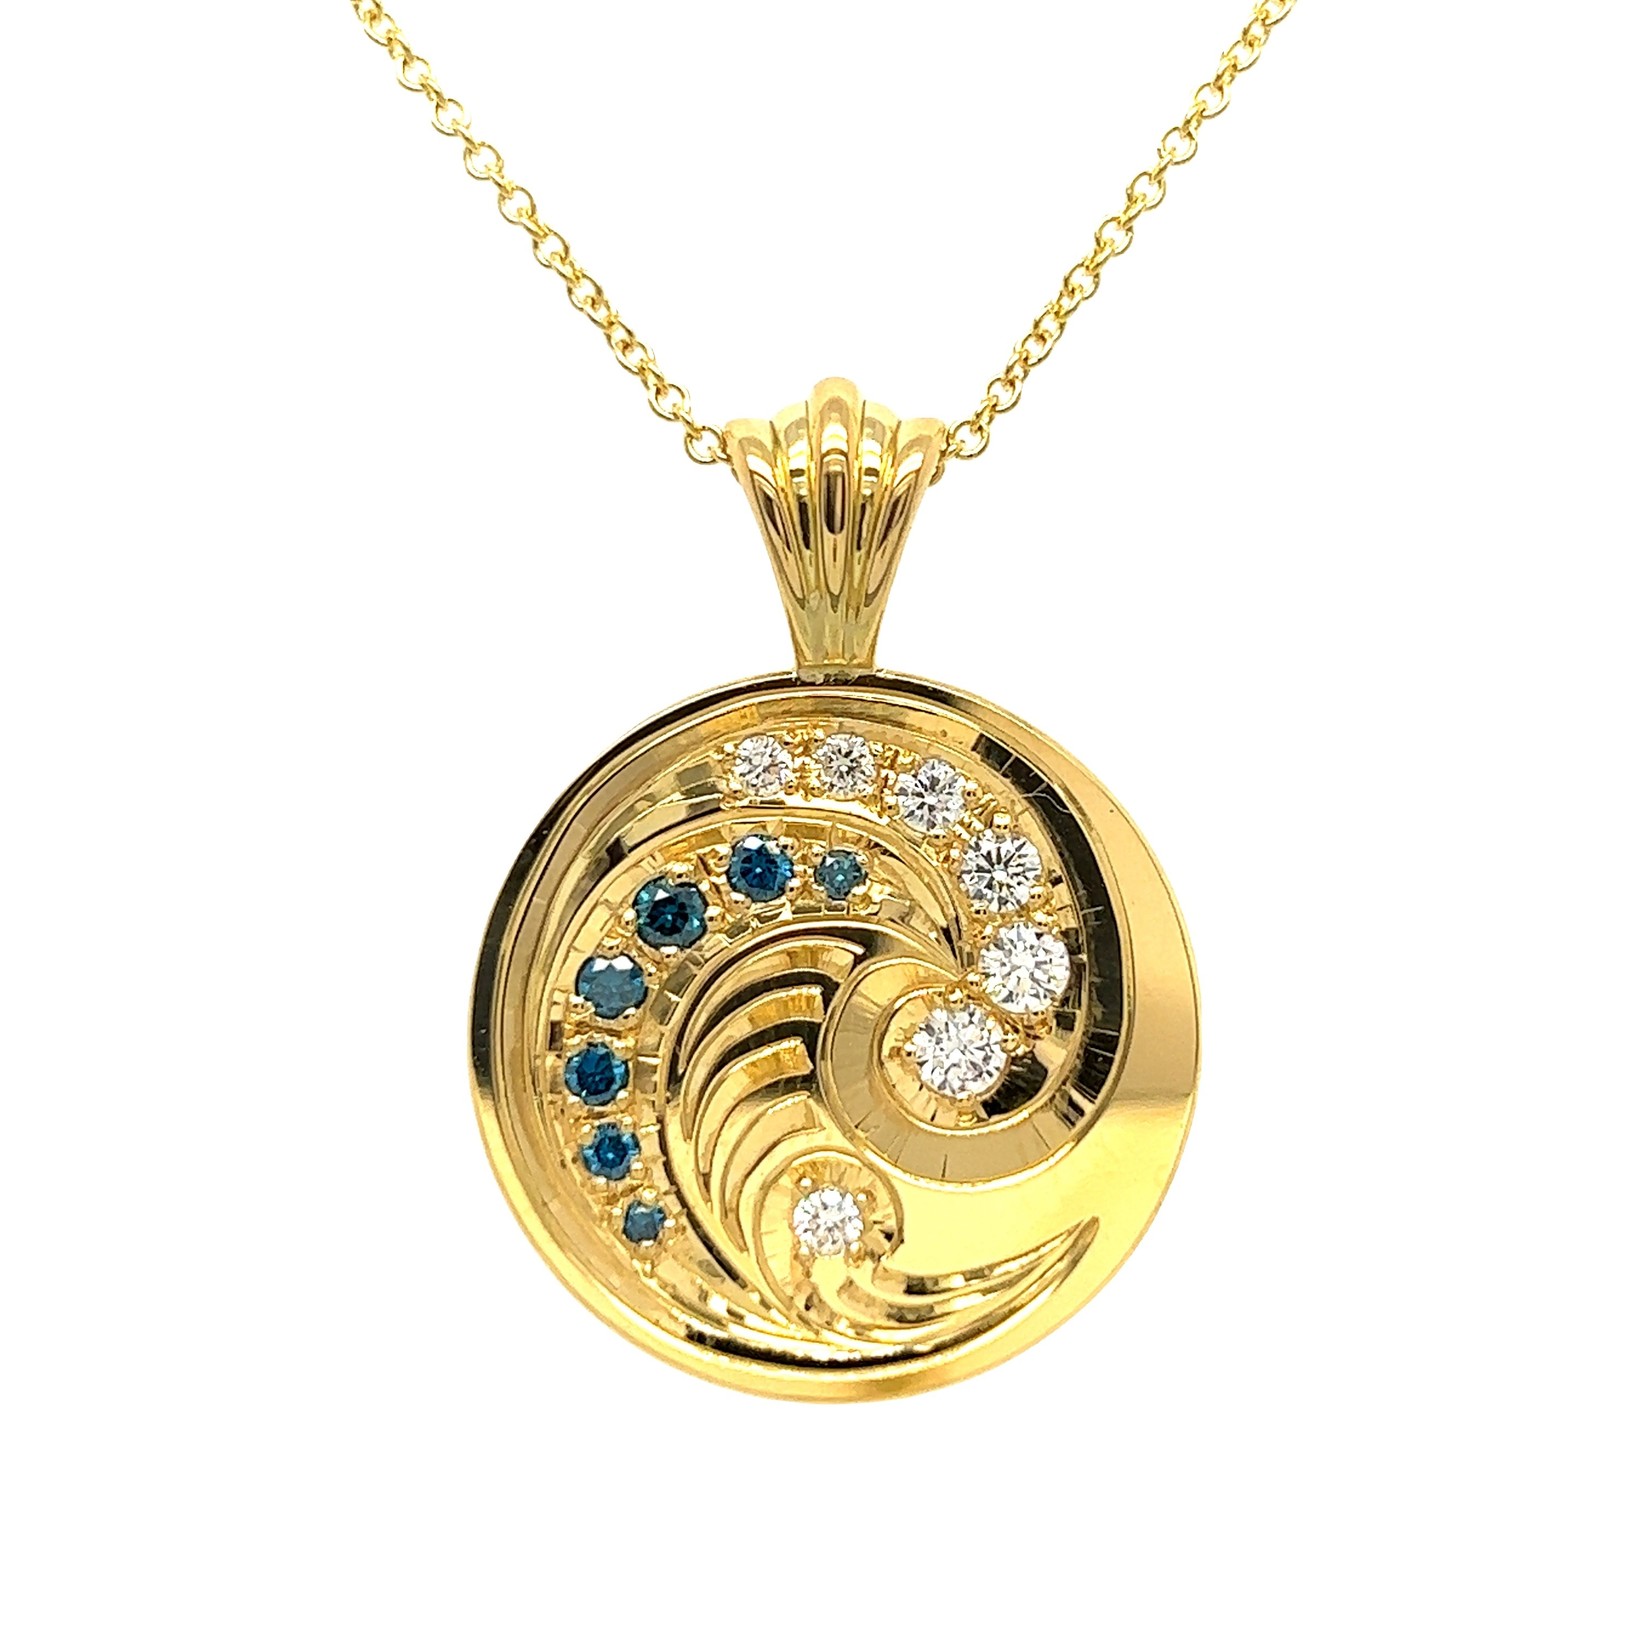 Kumu Nalu 18K Yellow Gold Kumu Nalu pendant with Teal Blue & White Diamond Pendant